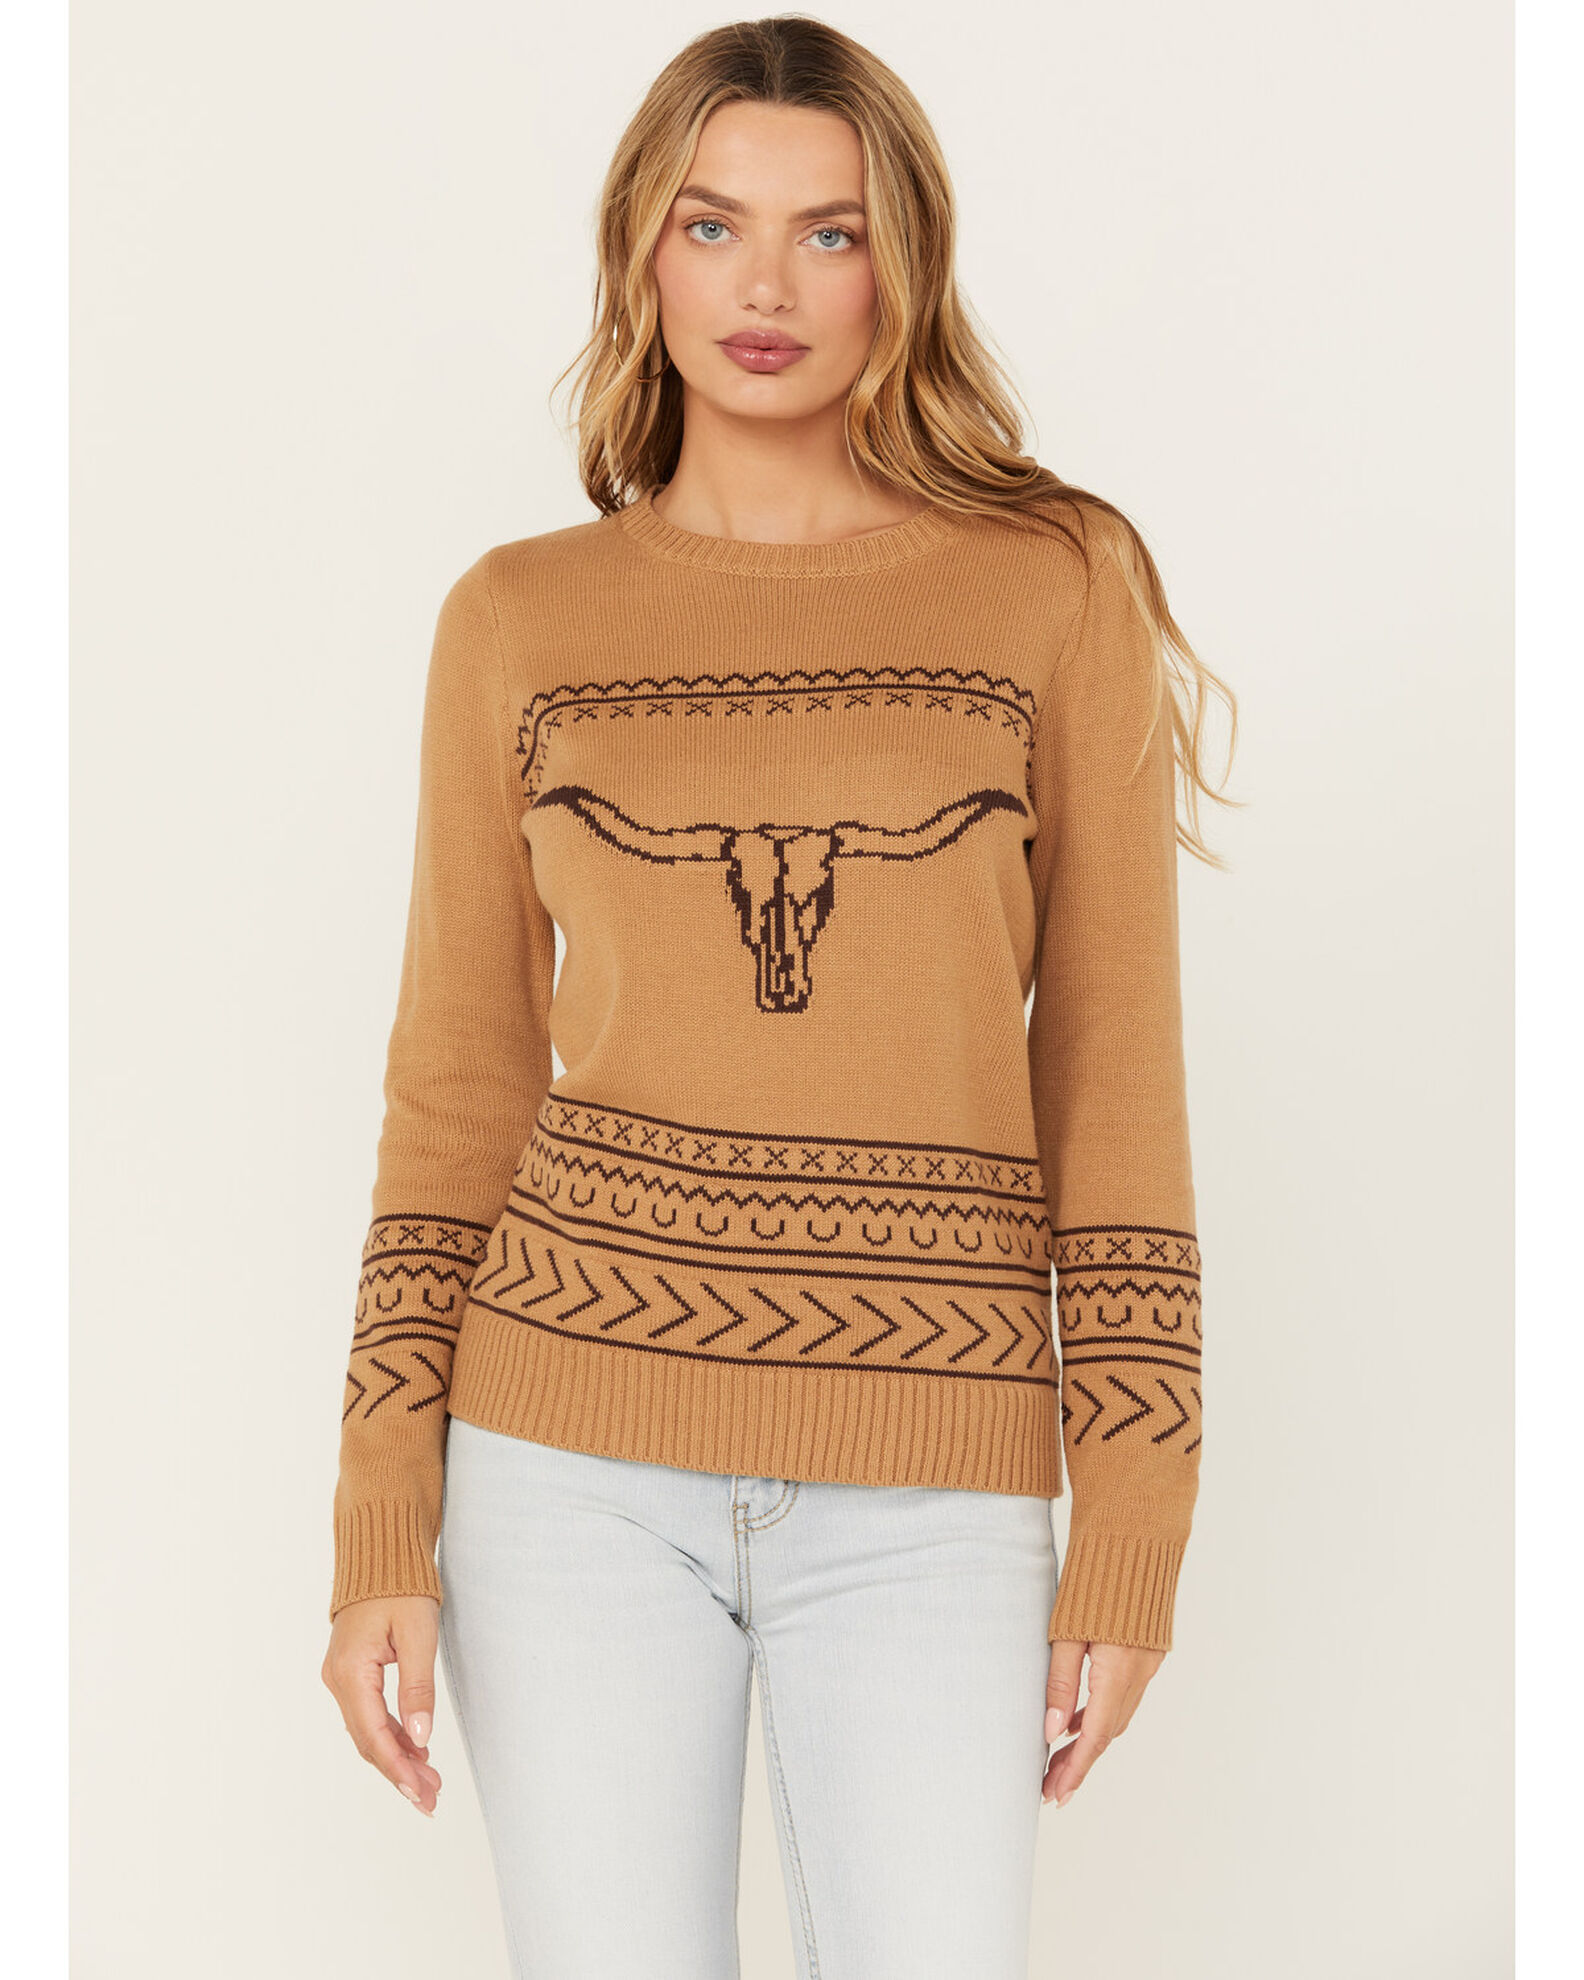 Cotton & Rye Women's Long Horn Sweater